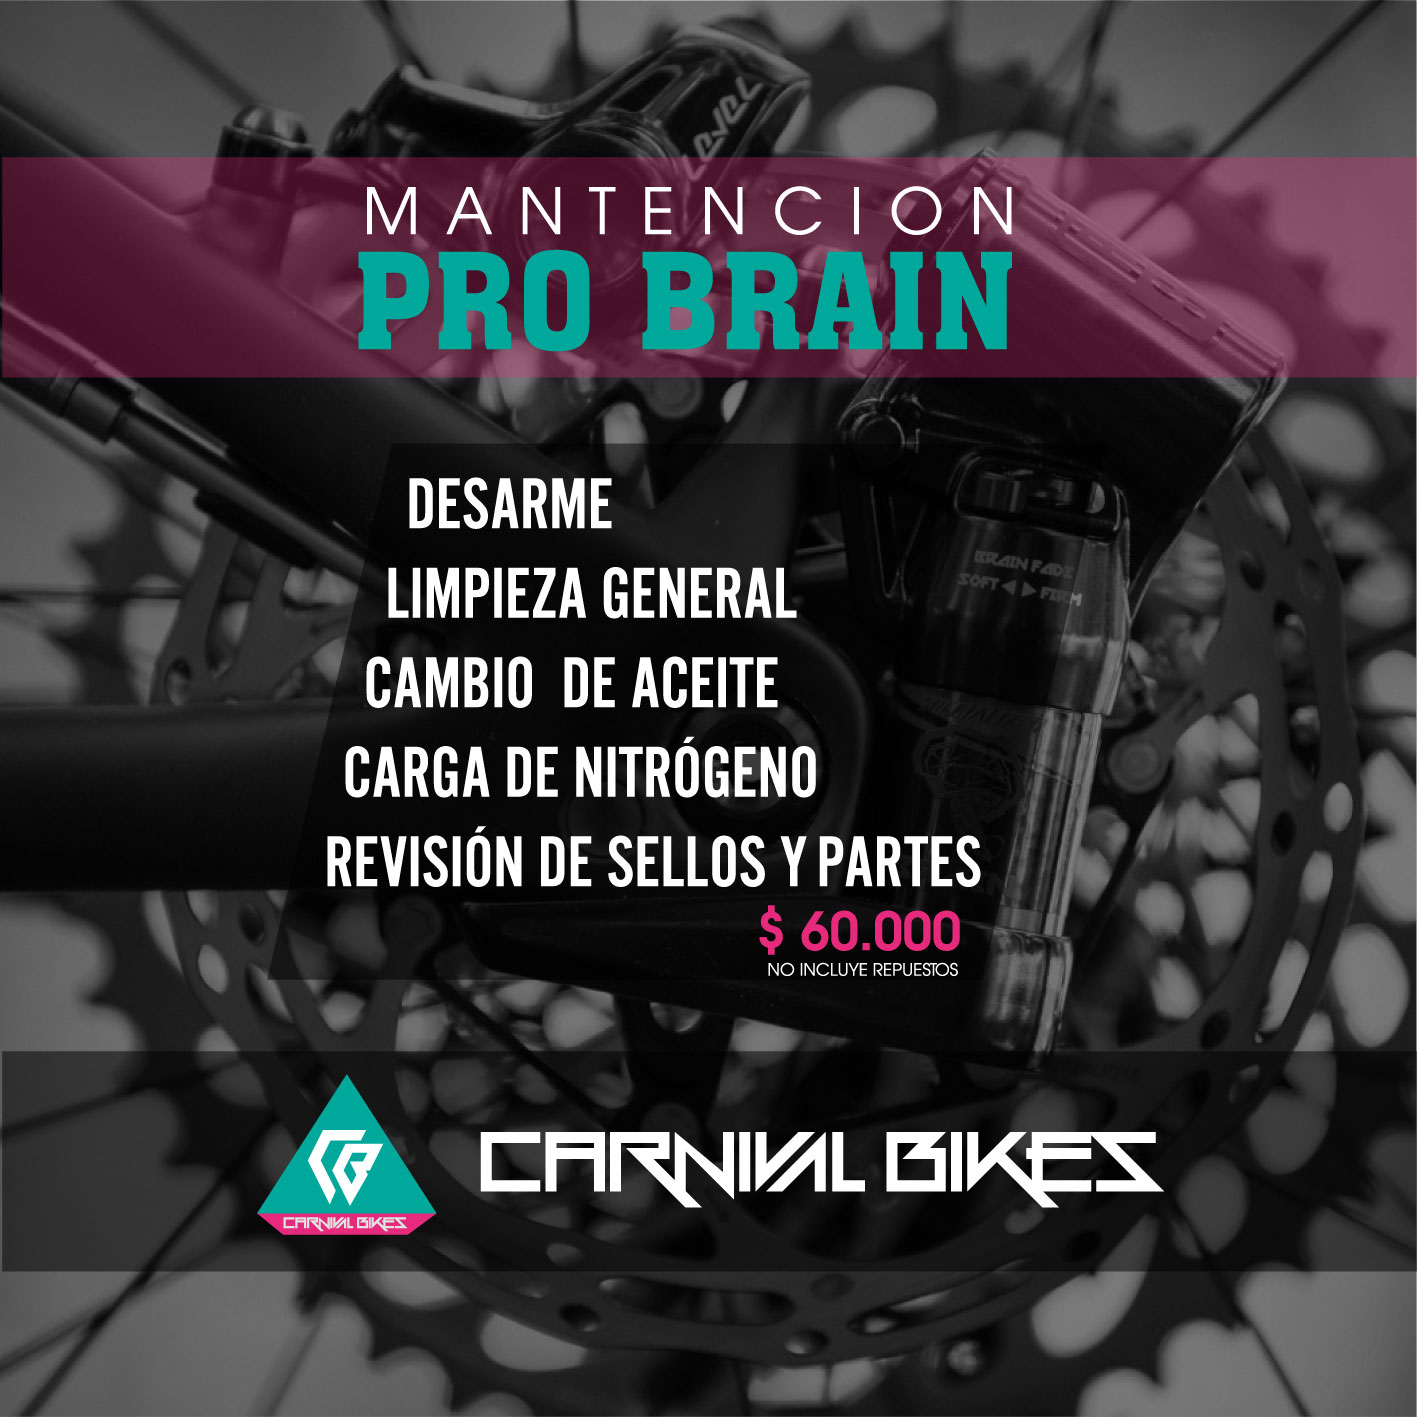 carnivalbikes-ficha-mantencion-Pro-Brain-sistema-specialized-taller-mecanico-santiago-chile-bicicleta-crosscountry-xco-xcm